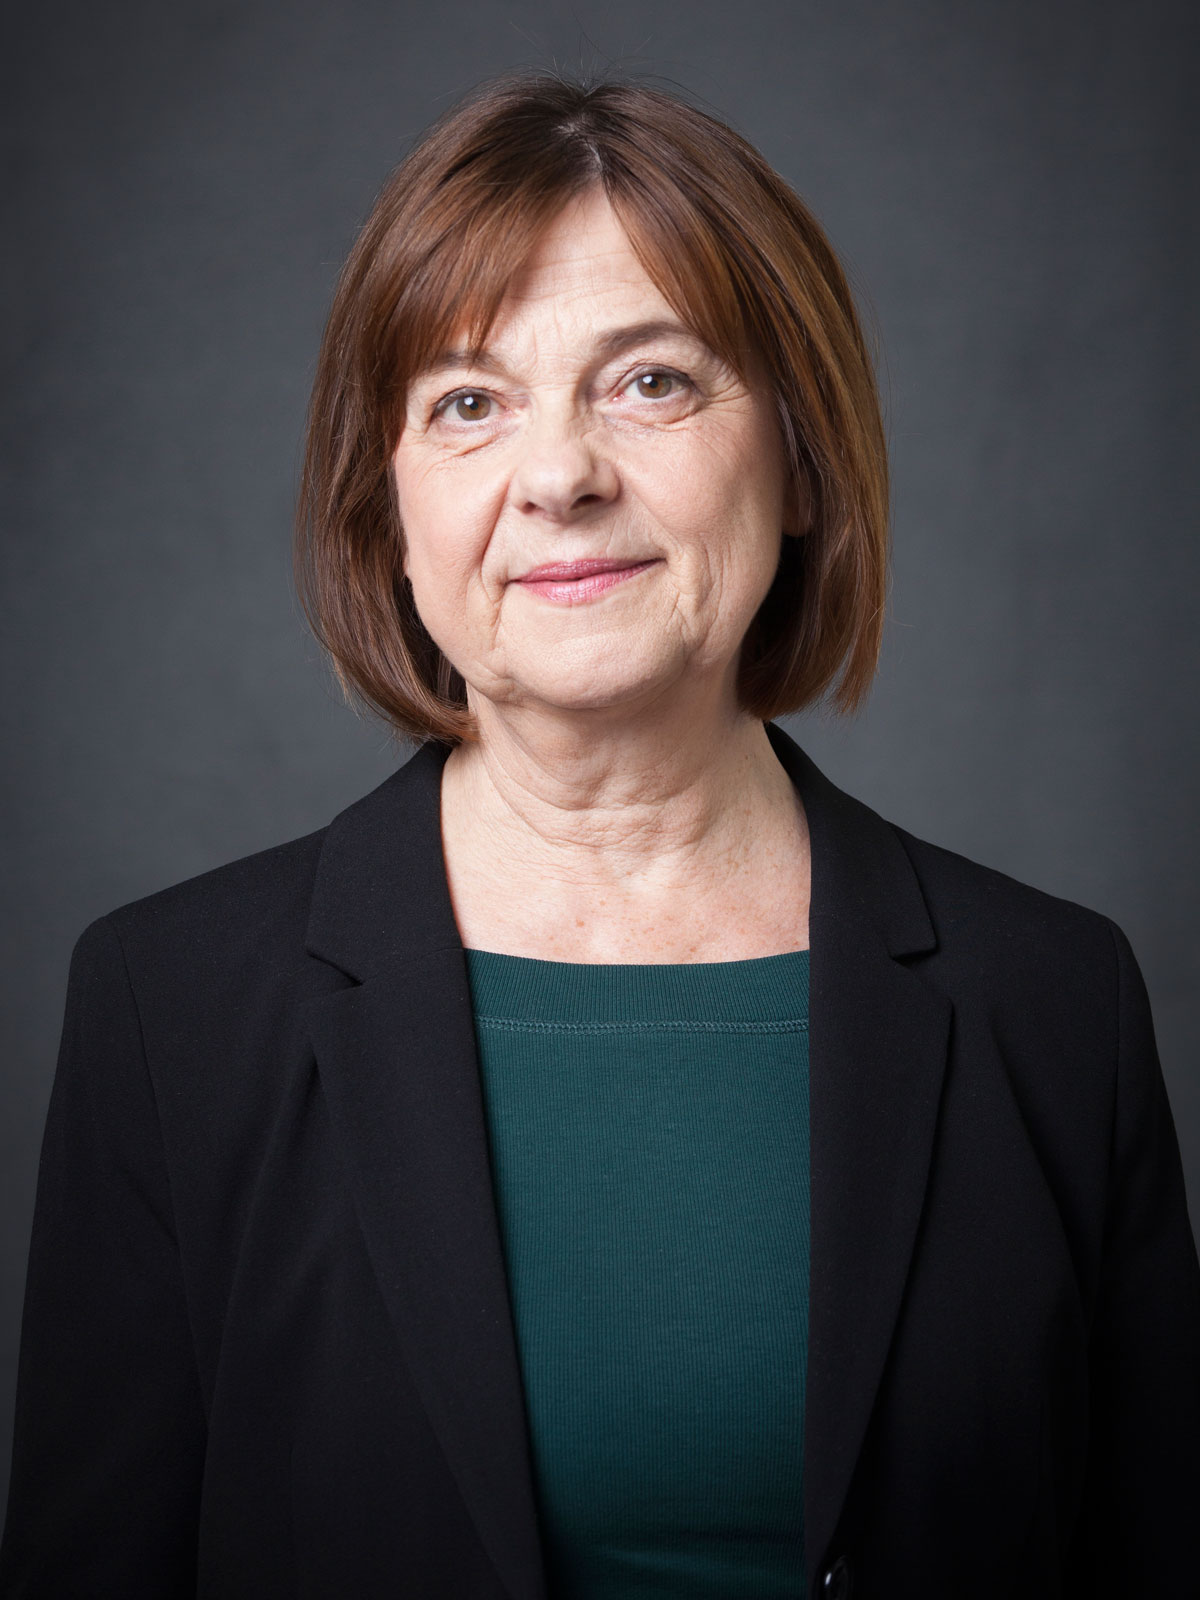 Ministerin Ursula Nonnemacher